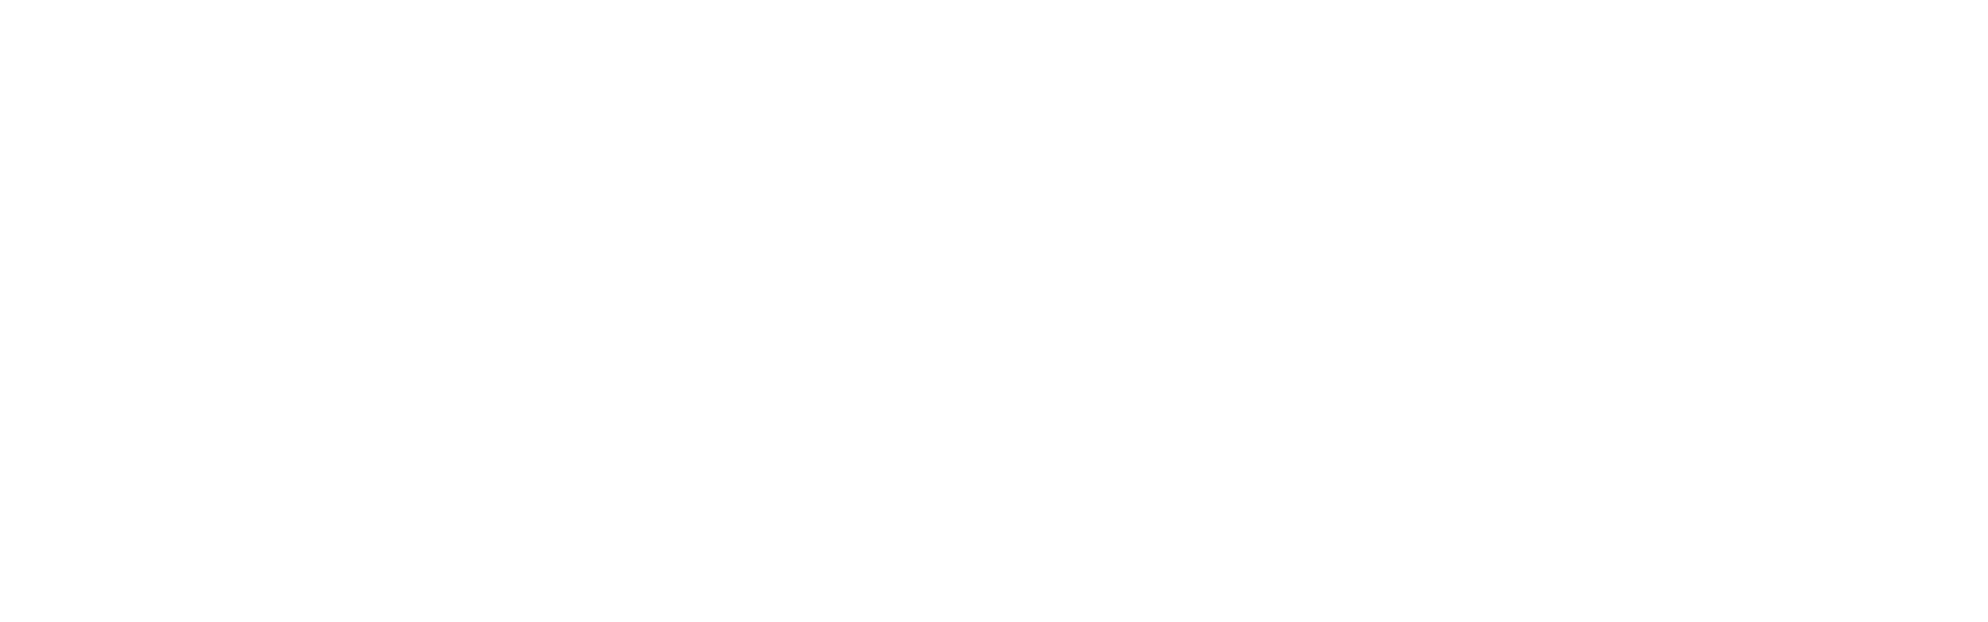 OpenFF Sphinx theme logo